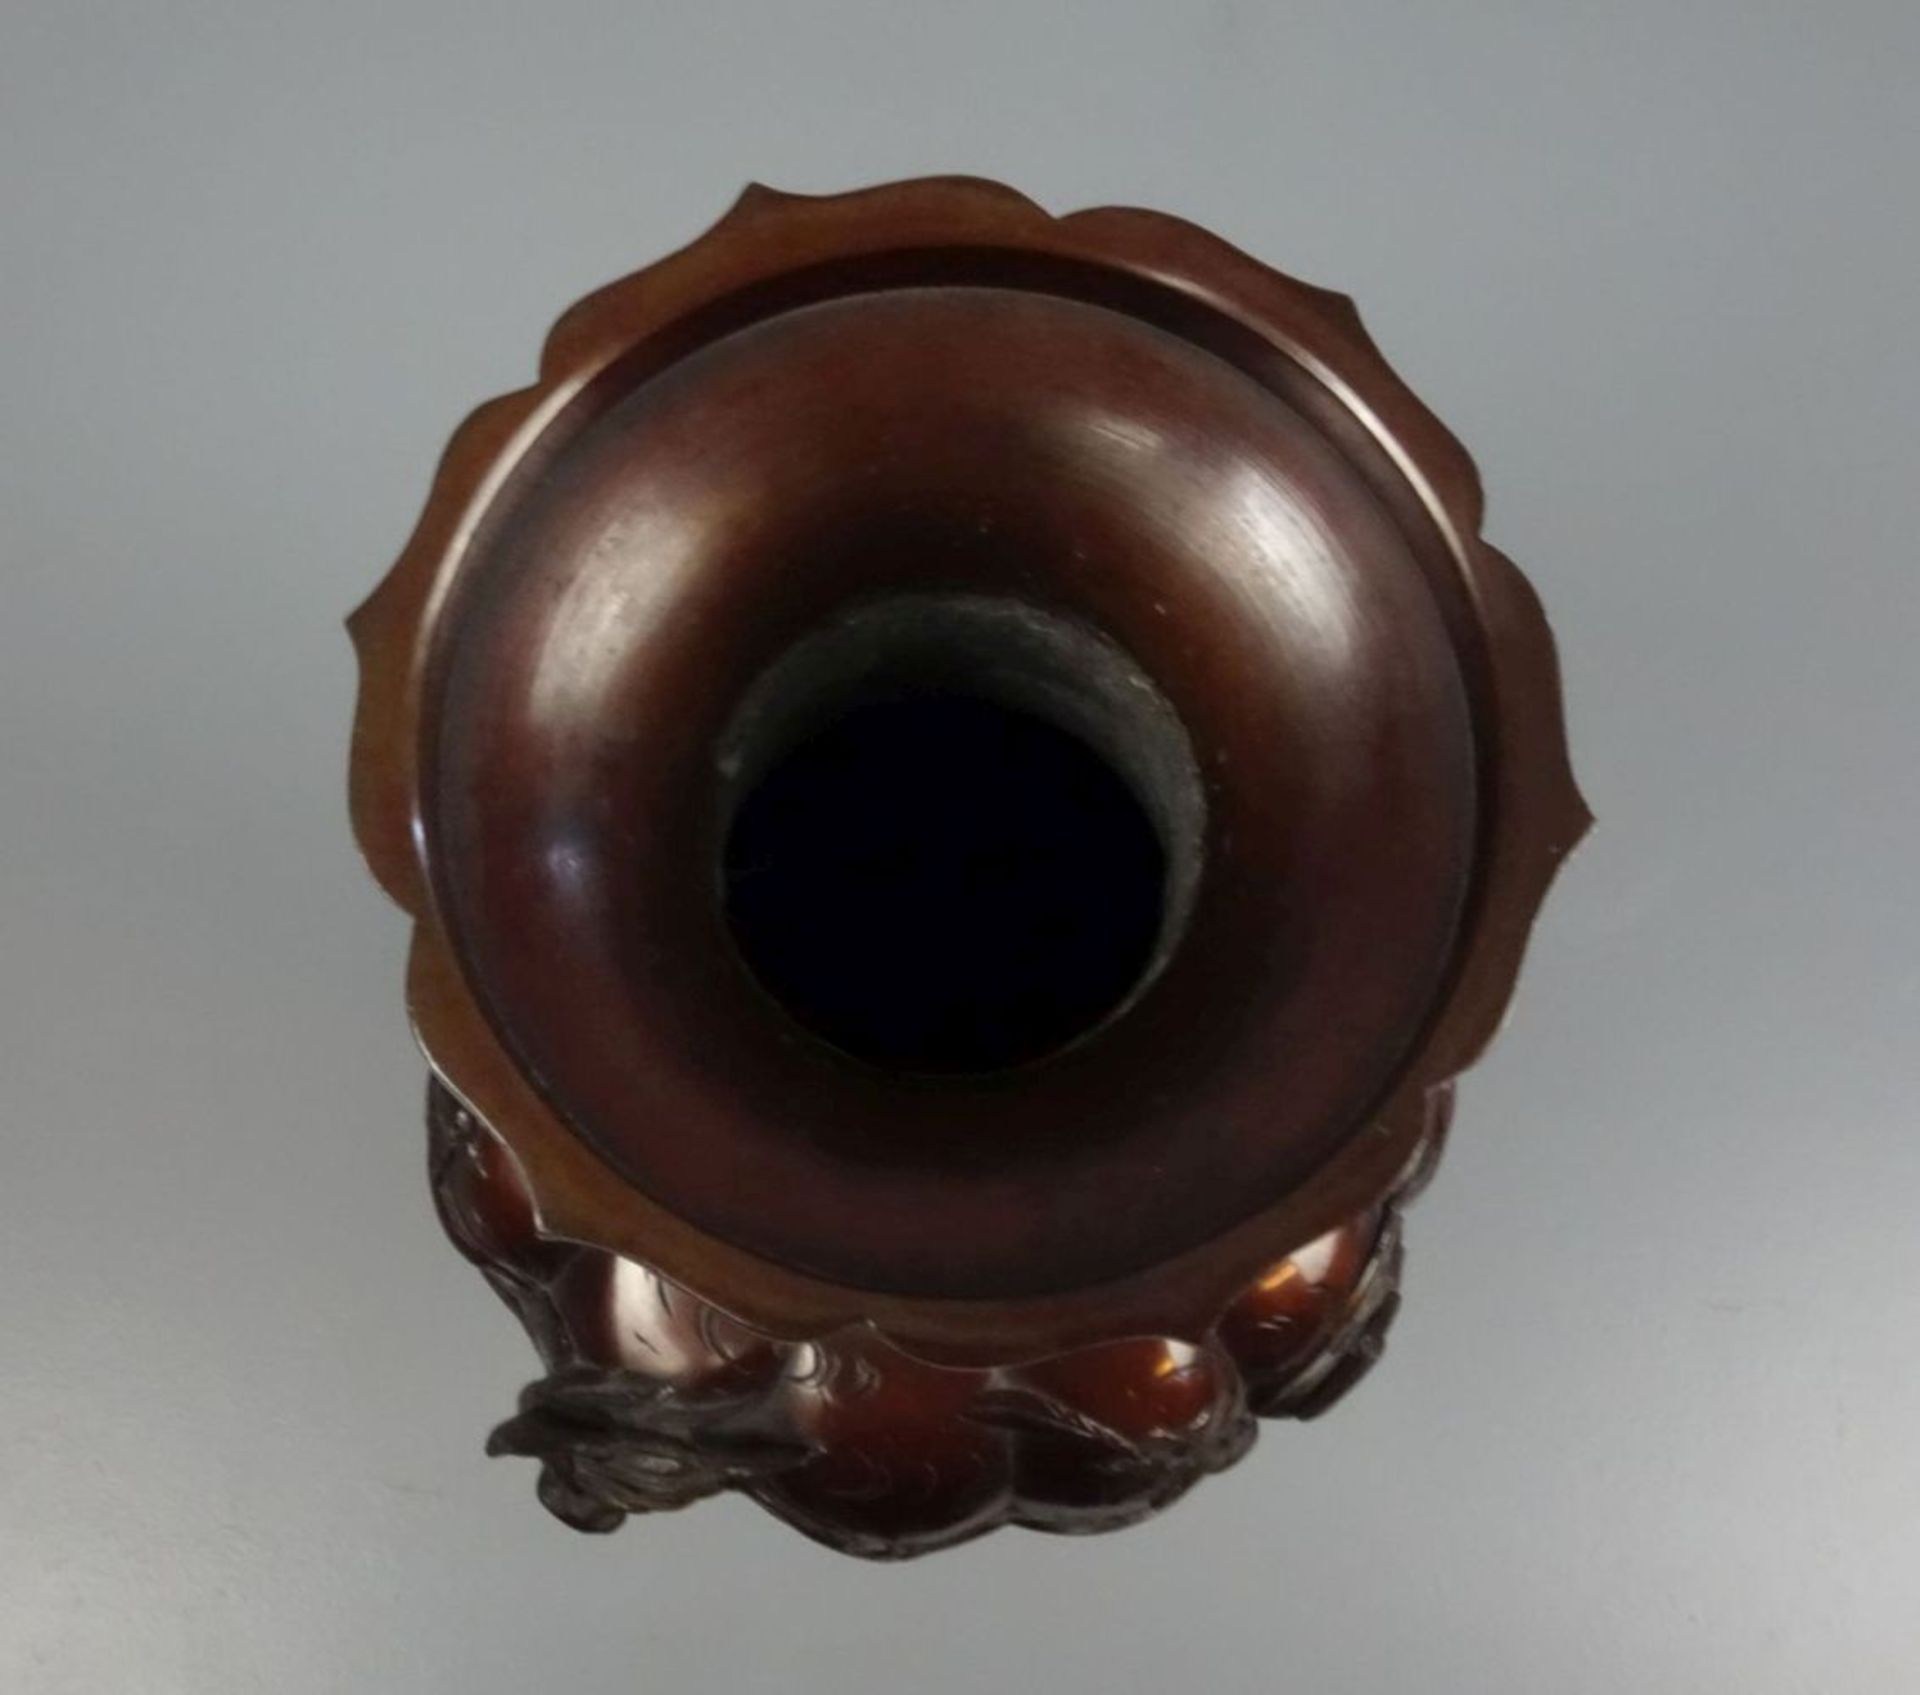 BODENVASE AUS METALL / chinese metal vase, China, 20. Jh., brüniertes Metall, unter dem Stand mit - Image 5 of 5